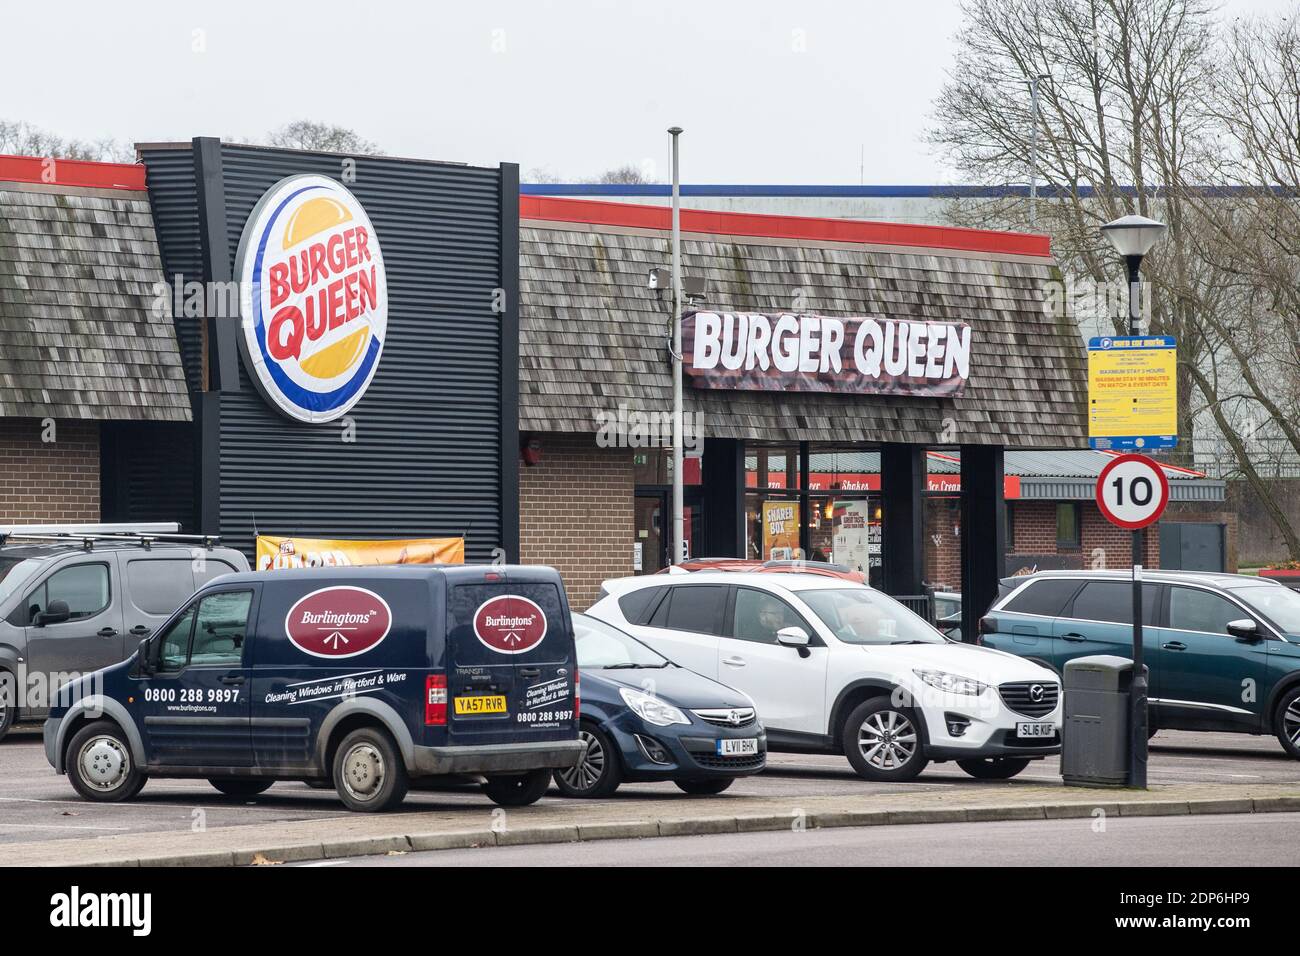 Burger King restaurant in Stevenage, Hertfordshire, UK rebrands as Burger Queen Stock Photo